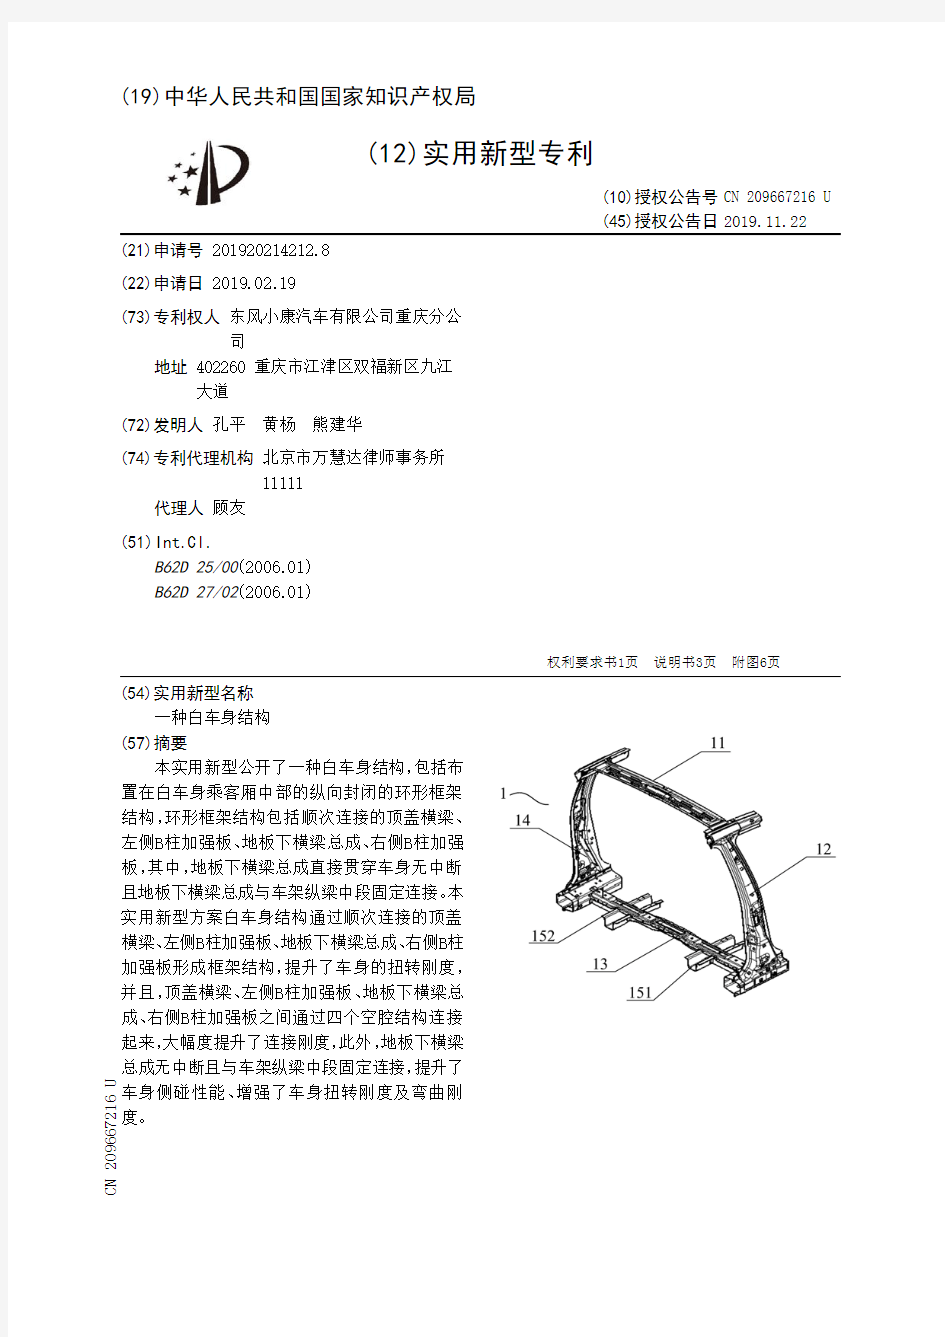 【CN209667216U】一种白车身结构【专利】